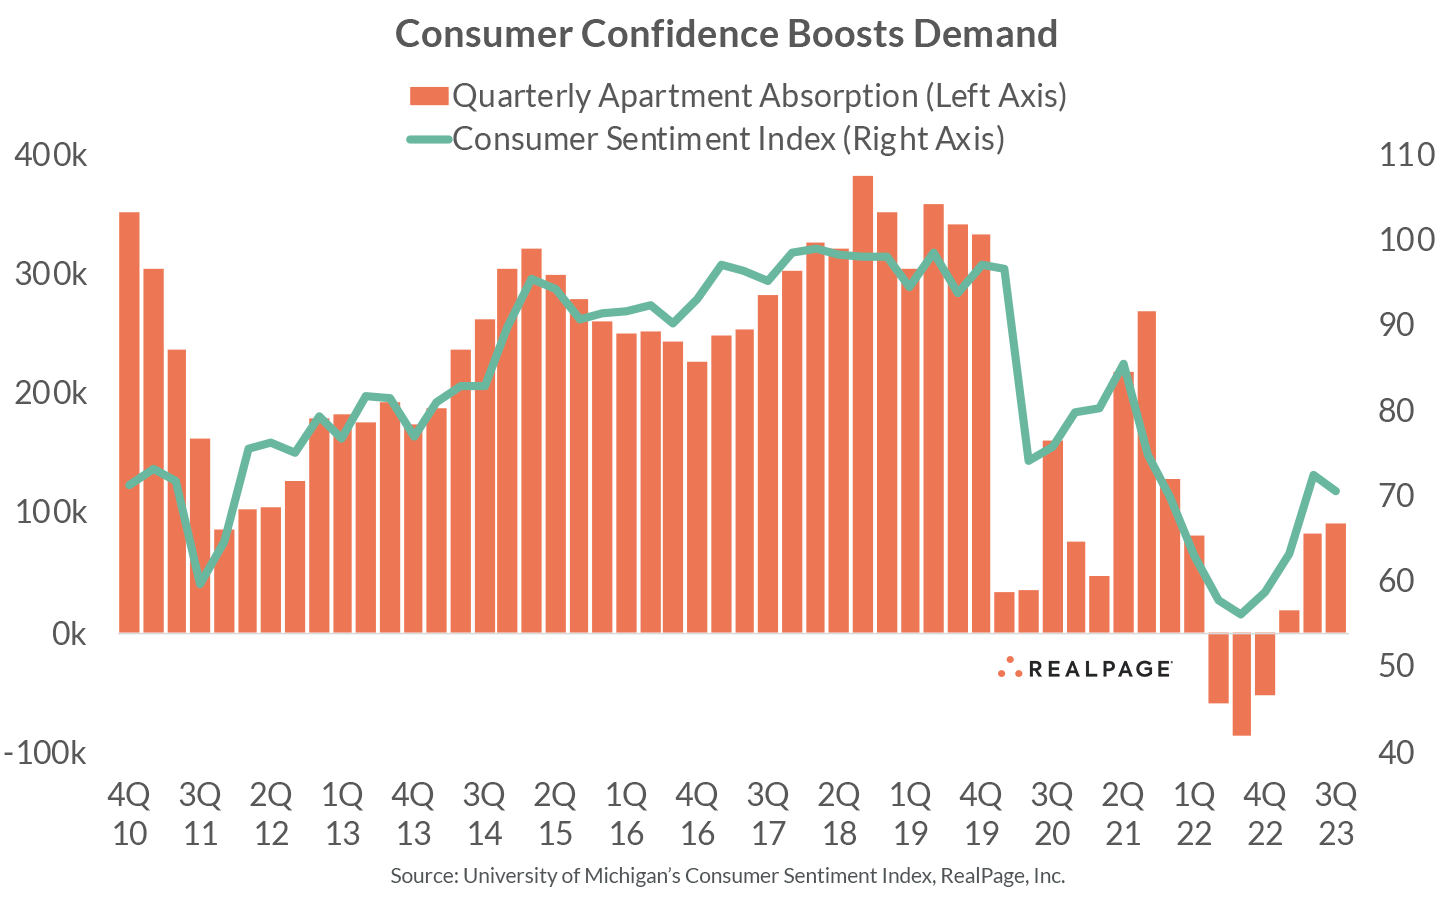 US consumer confidence boosts apartment demand